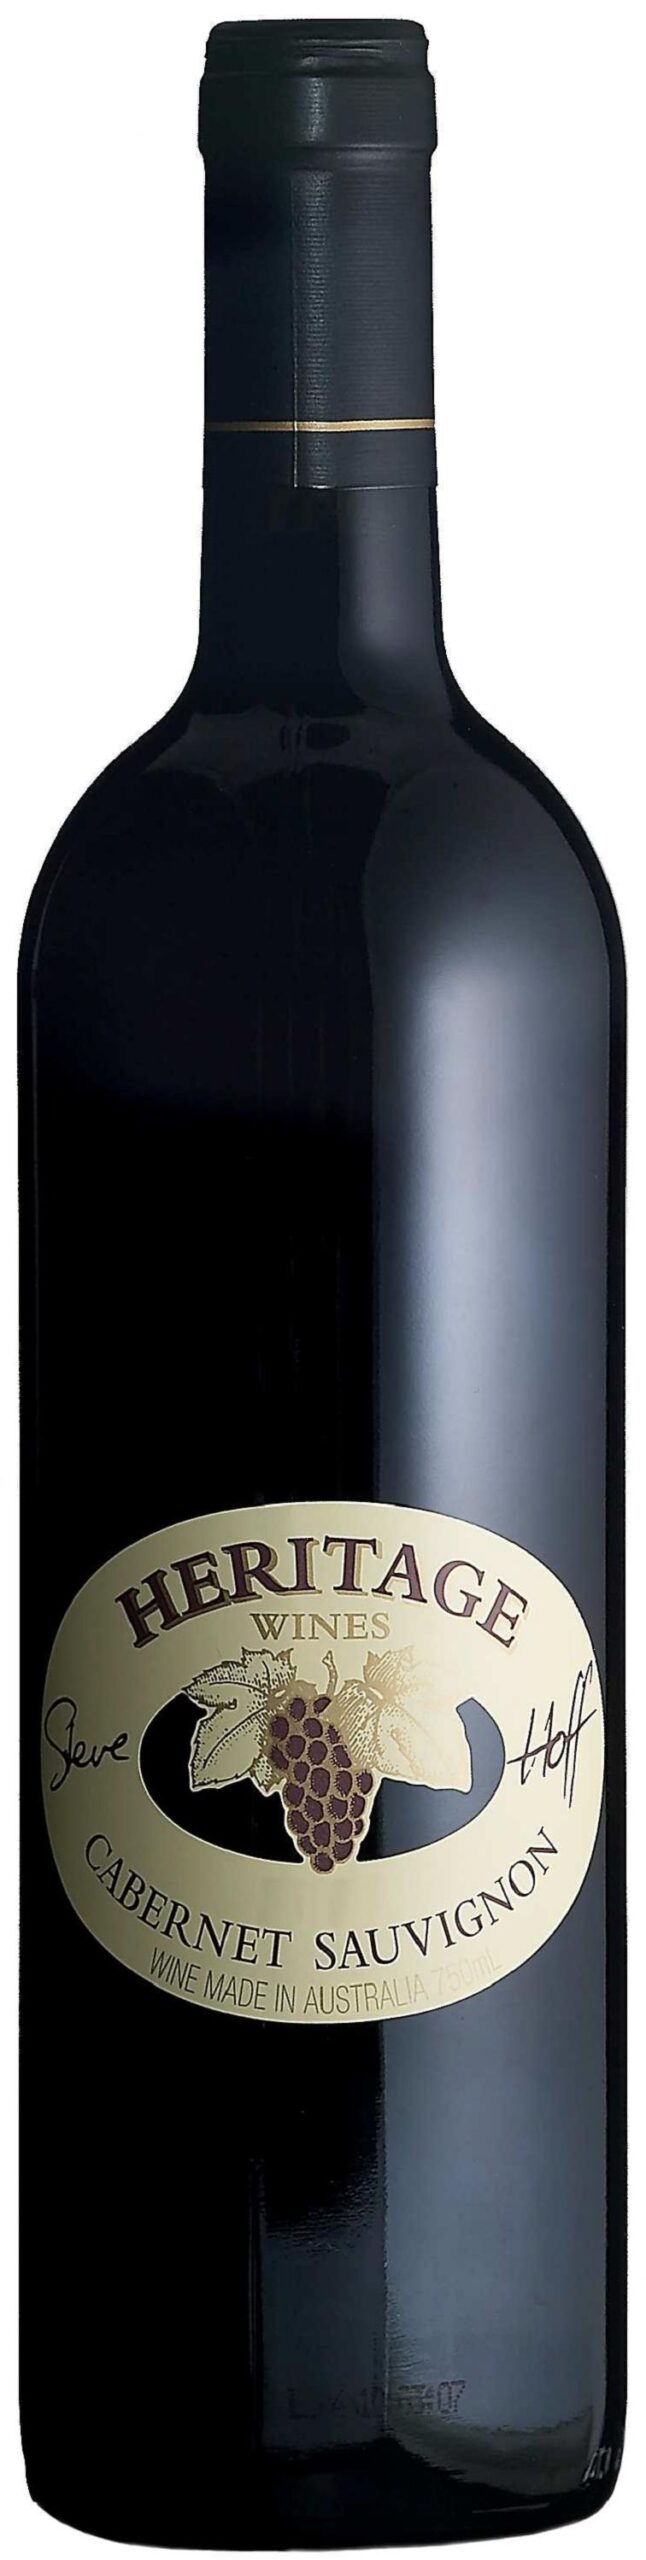 Heritage Wines Cabernet Sauvignon NV